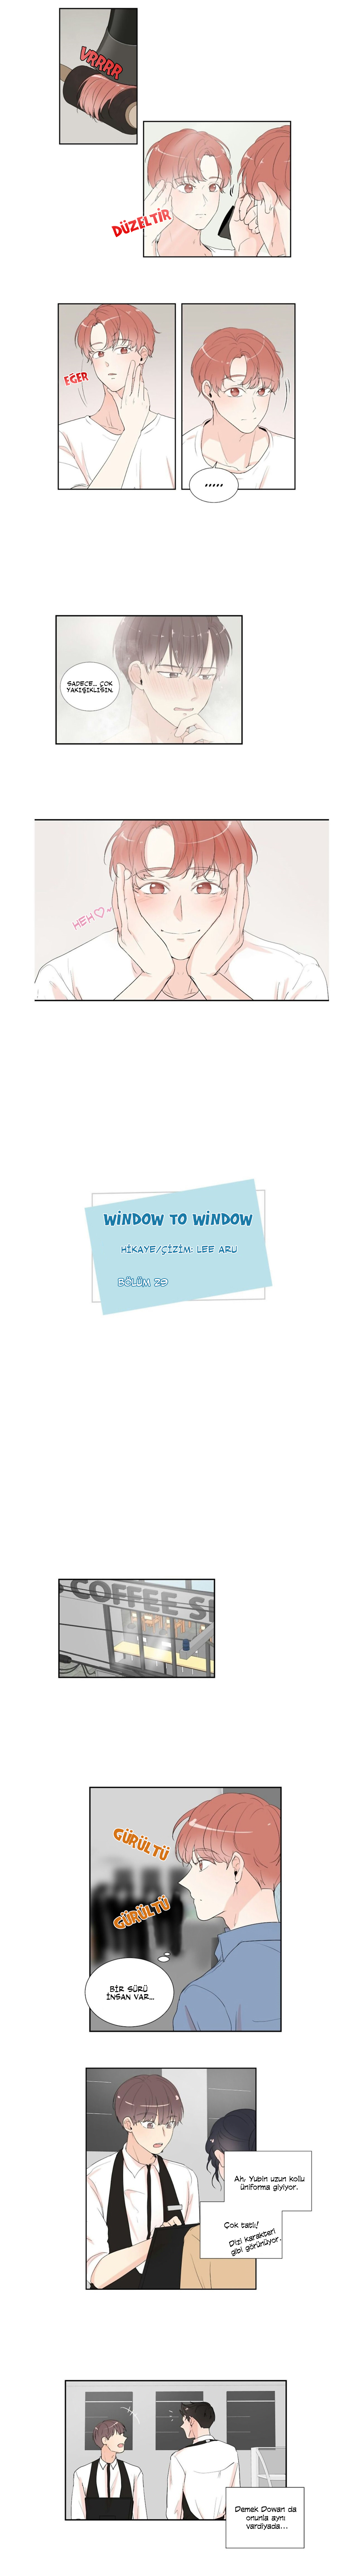 Window Beyond Window: Chapter 29 - Page 2